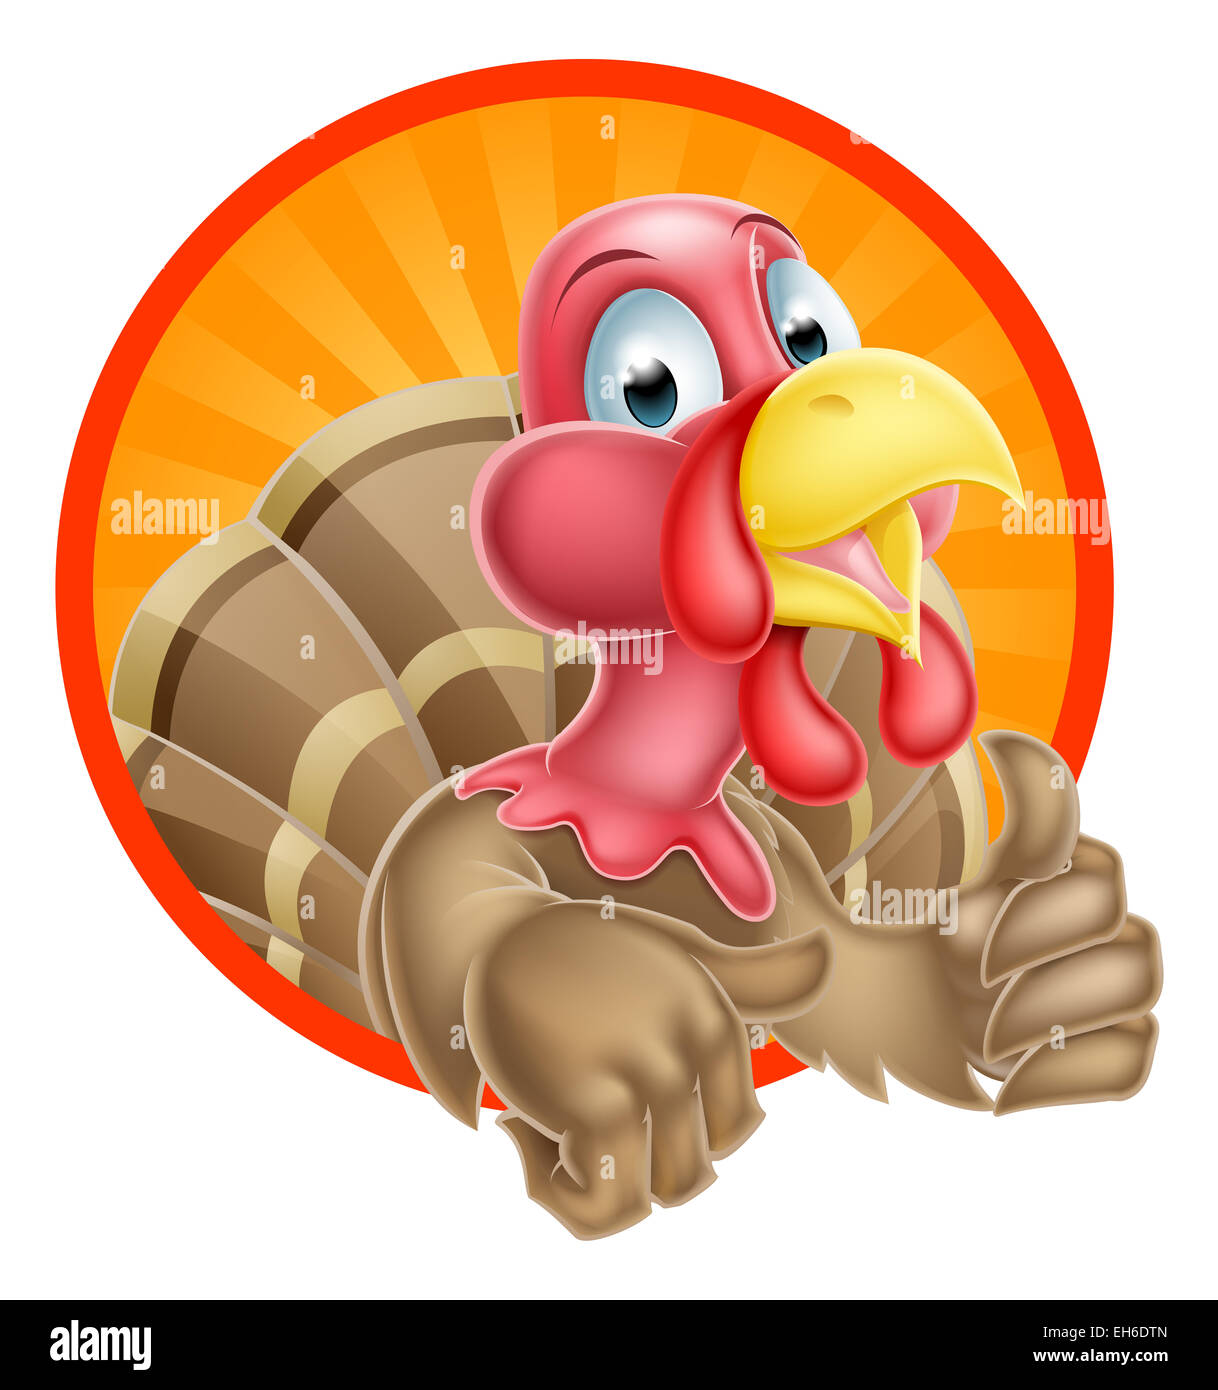 Cartoon turkey mascot character giving a thumbs up Stock Photo